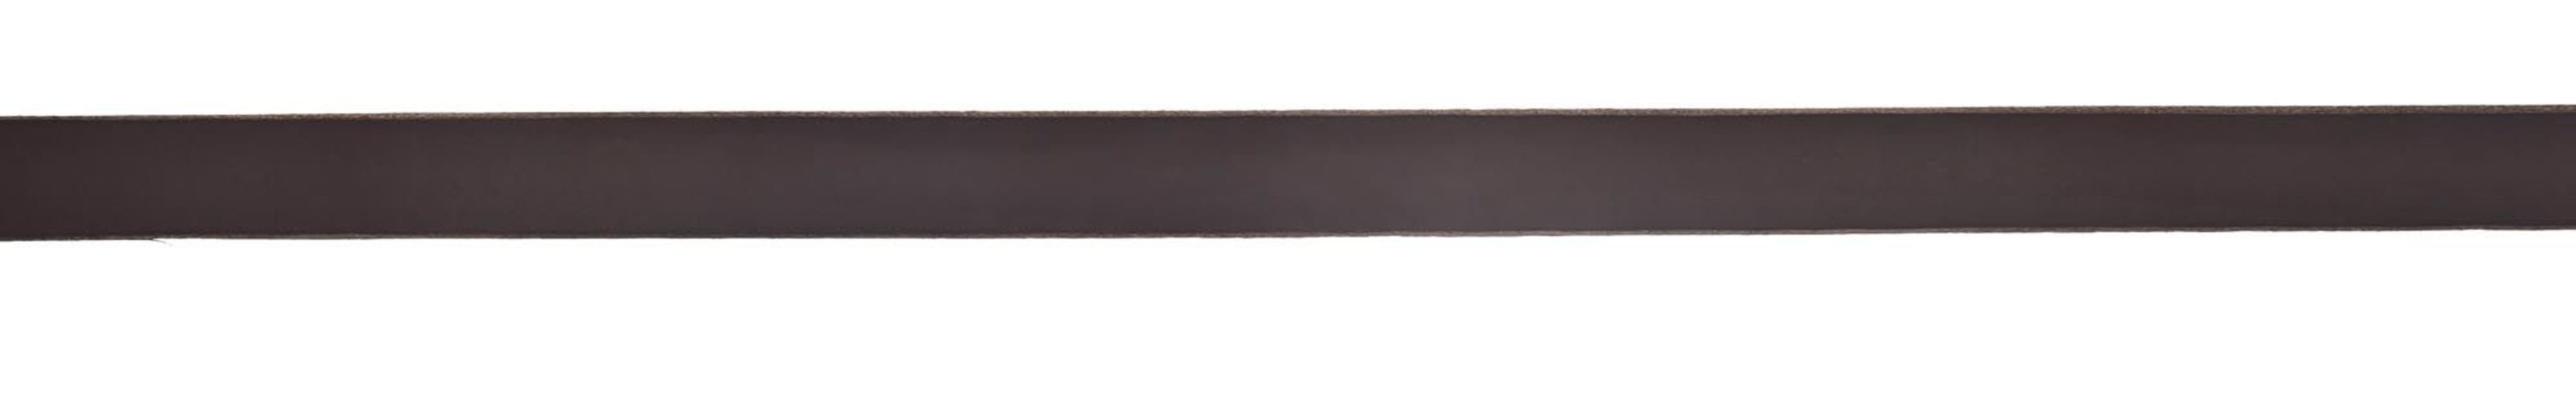 Vanzetti Ceinture en cuir  - brun (0660)